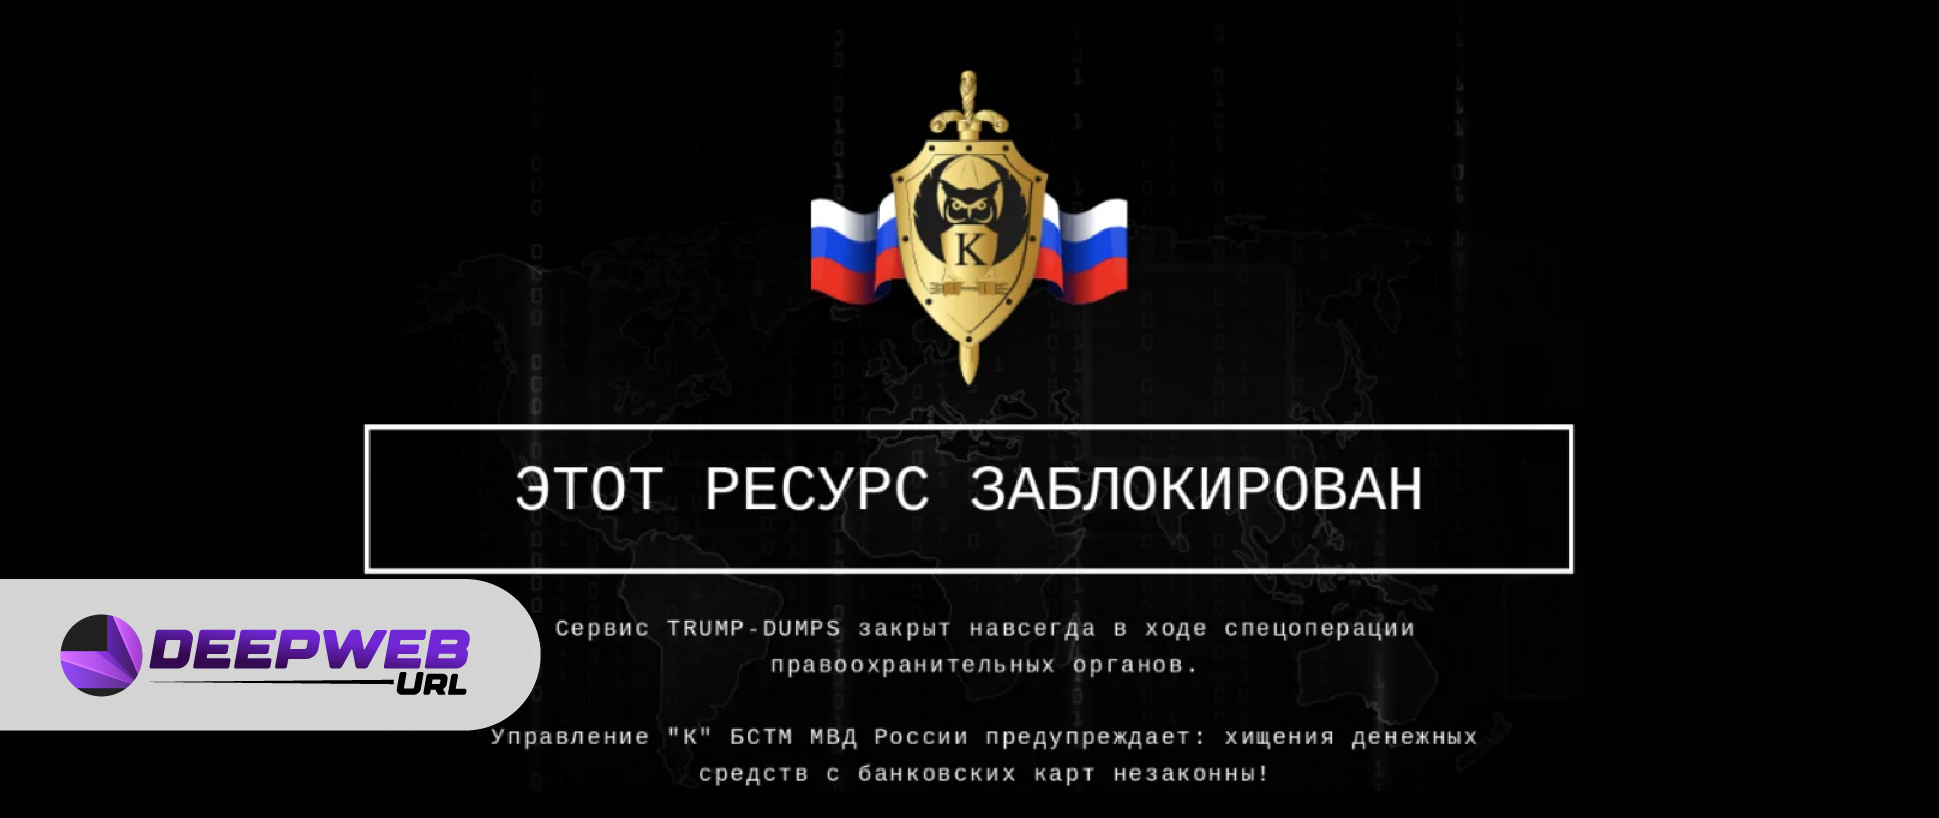 DeepWeb URLs Seized by Russia